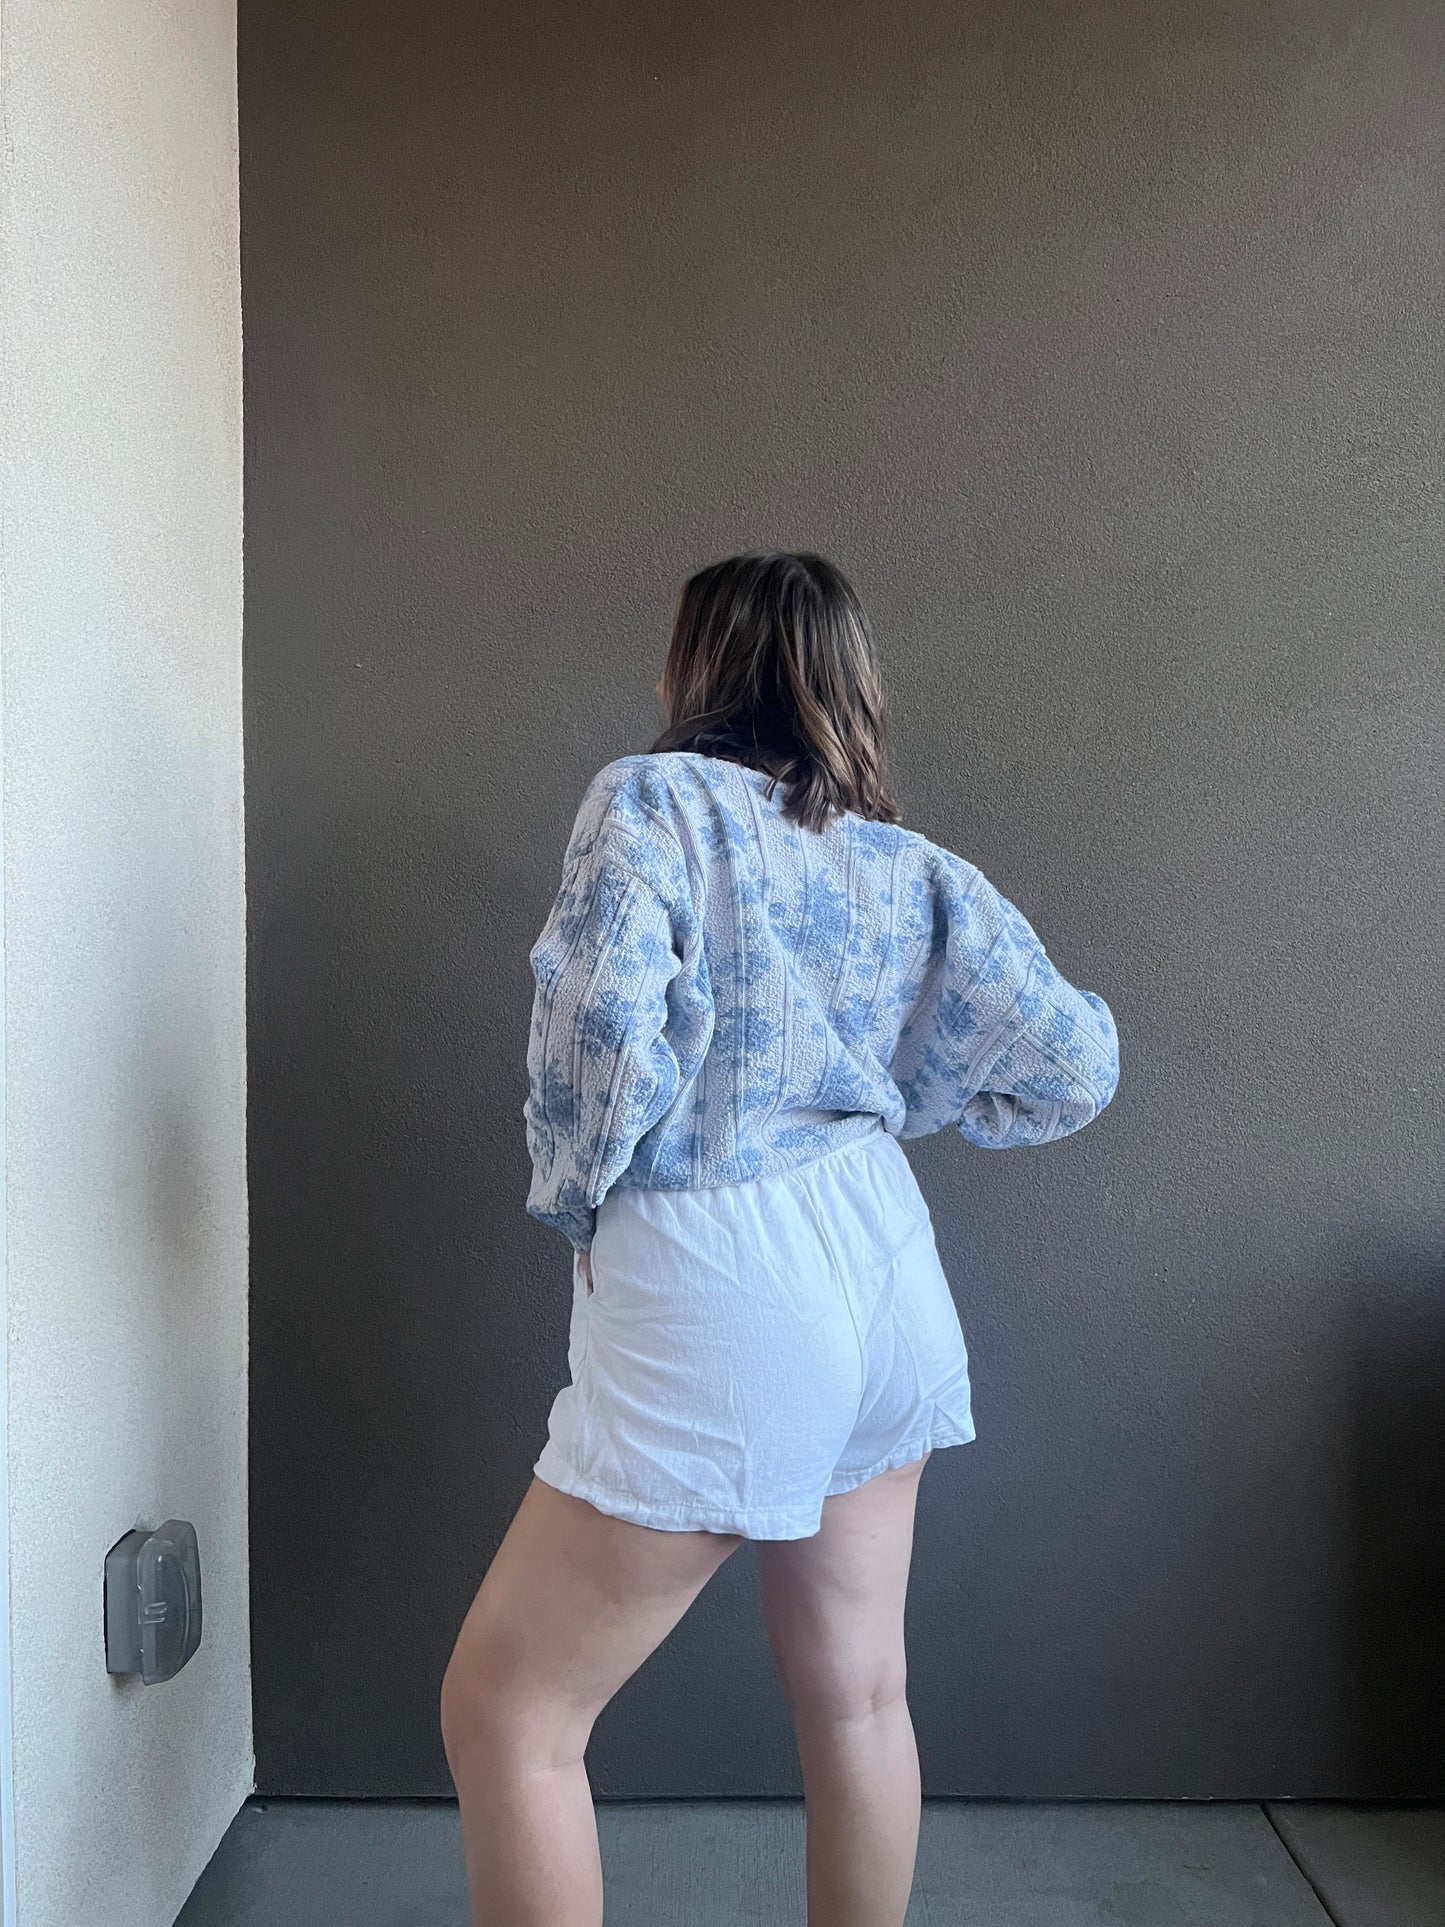 White Linen Blend Shorts (M)